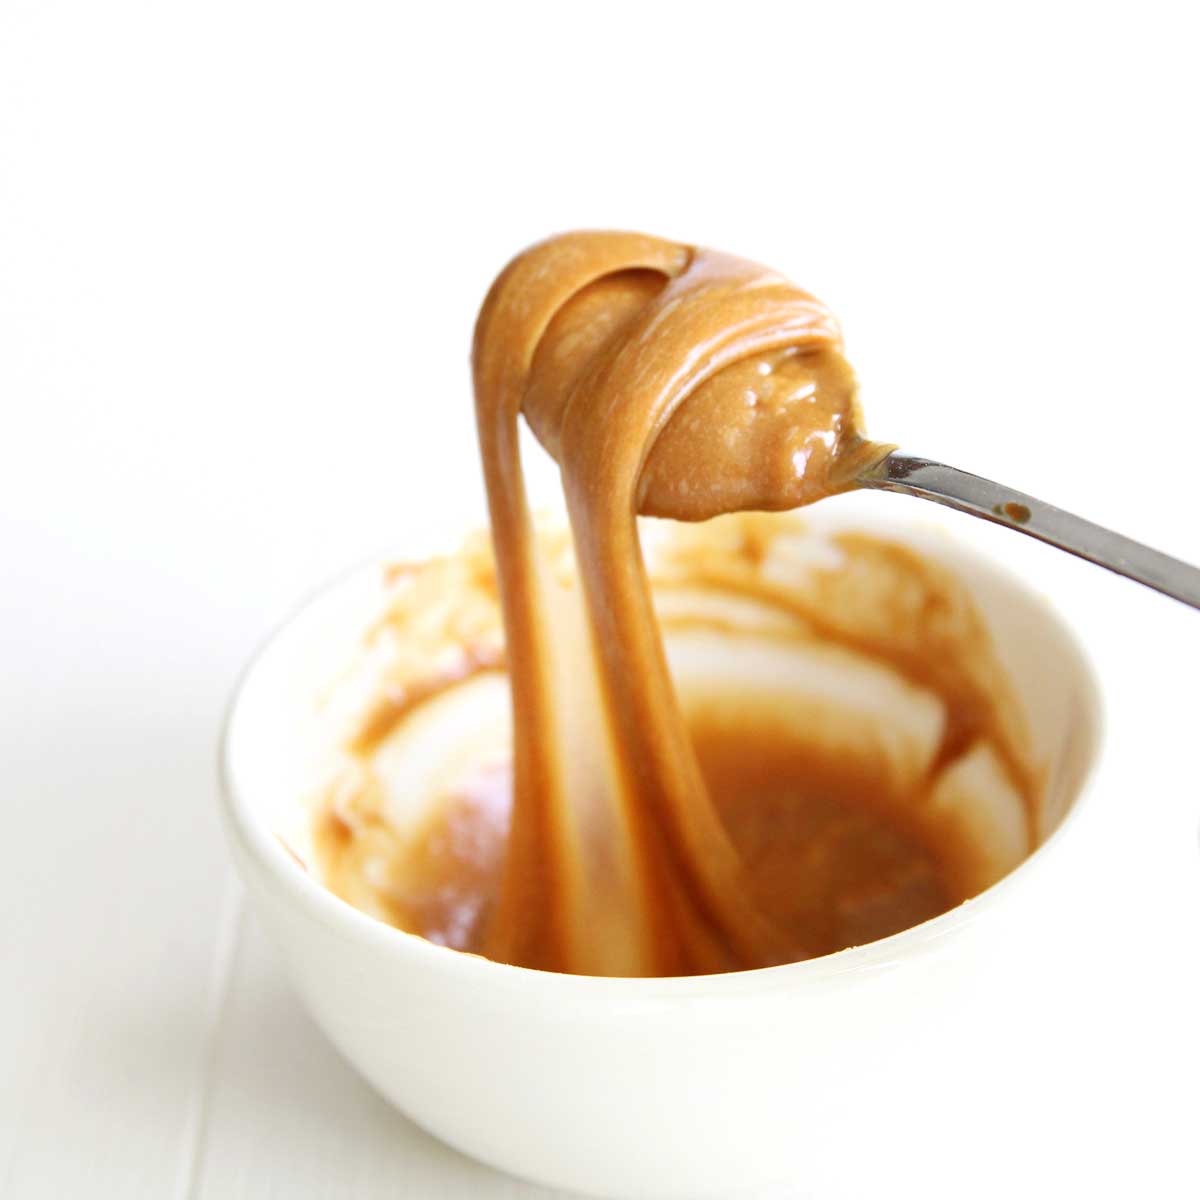 No Cook Keto Caramel Glaze for Banana Bread, Cinnamon Rolls, Cookies and More! - Zero-Sugar Whipped Cream